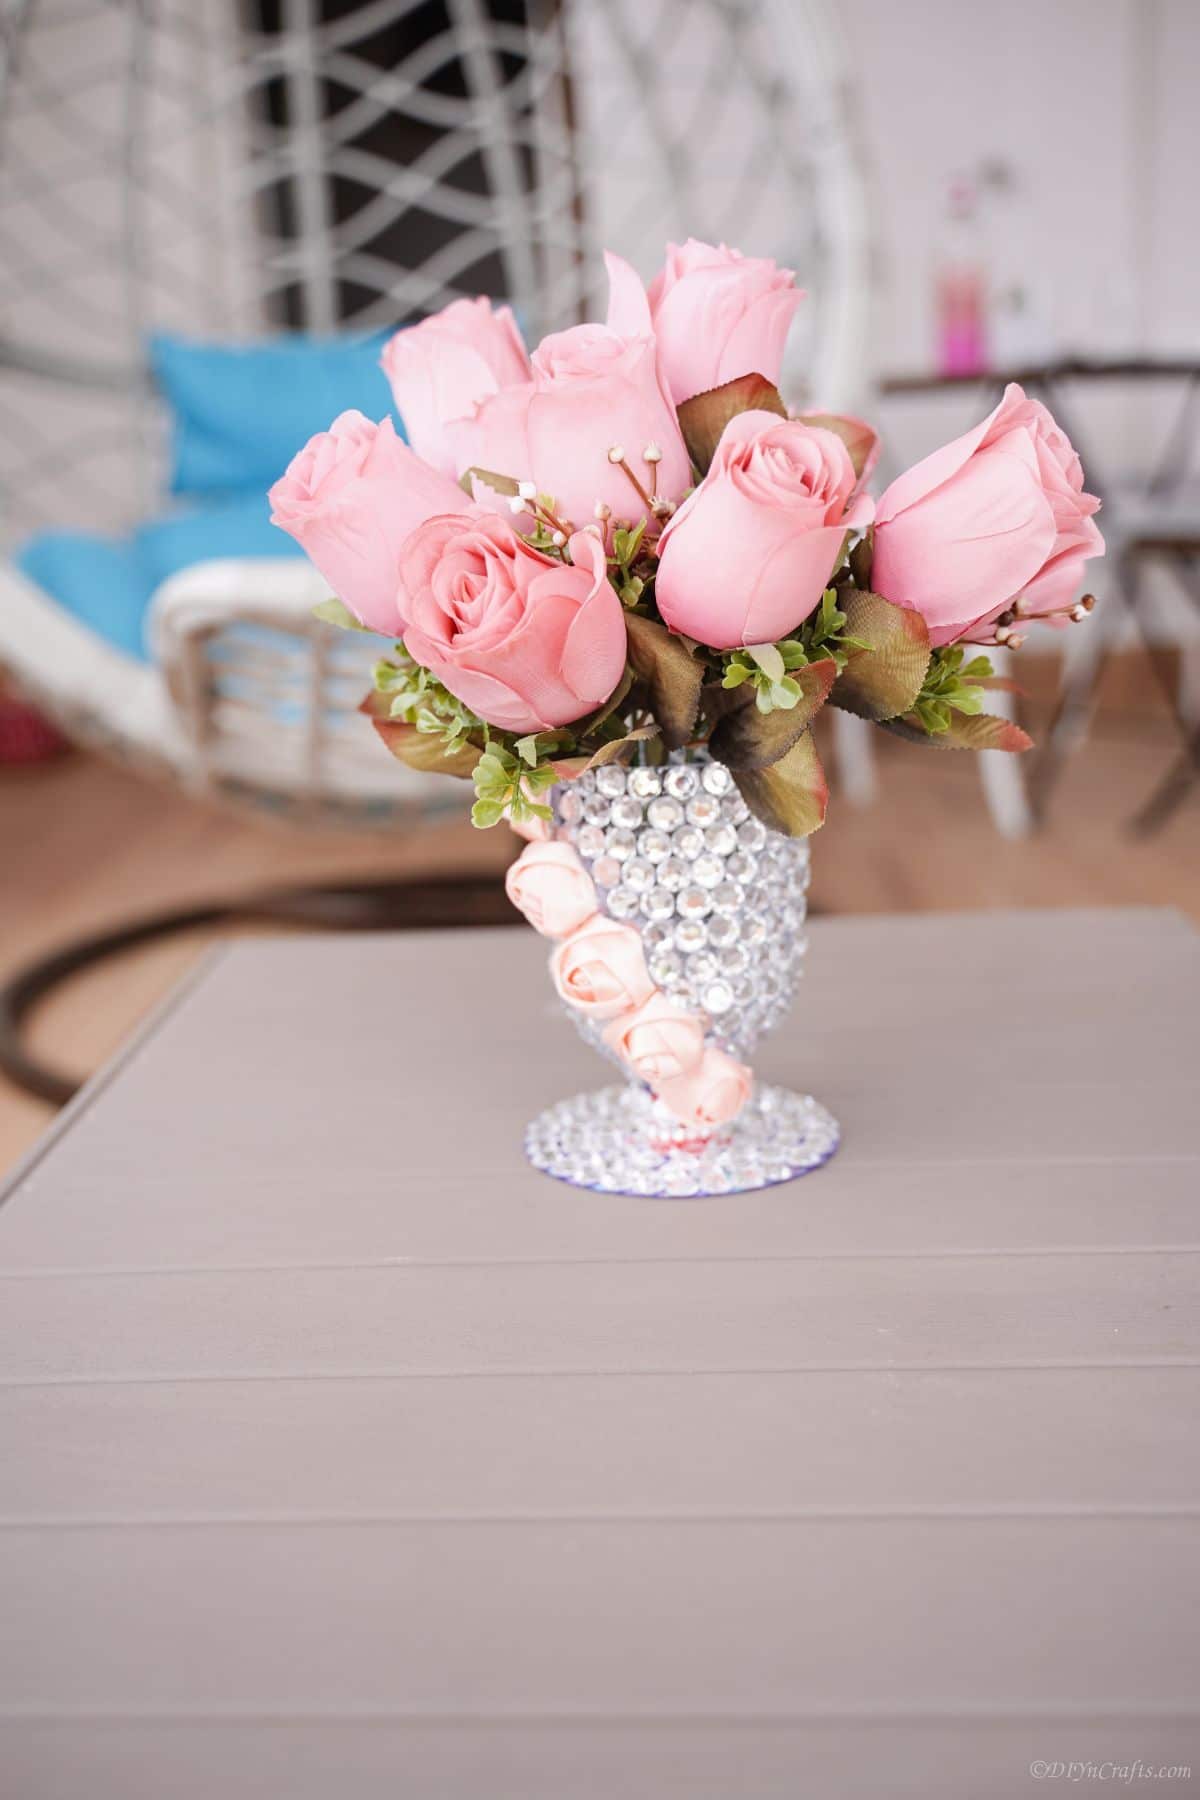 rhinestone vase of pink roses on gray table